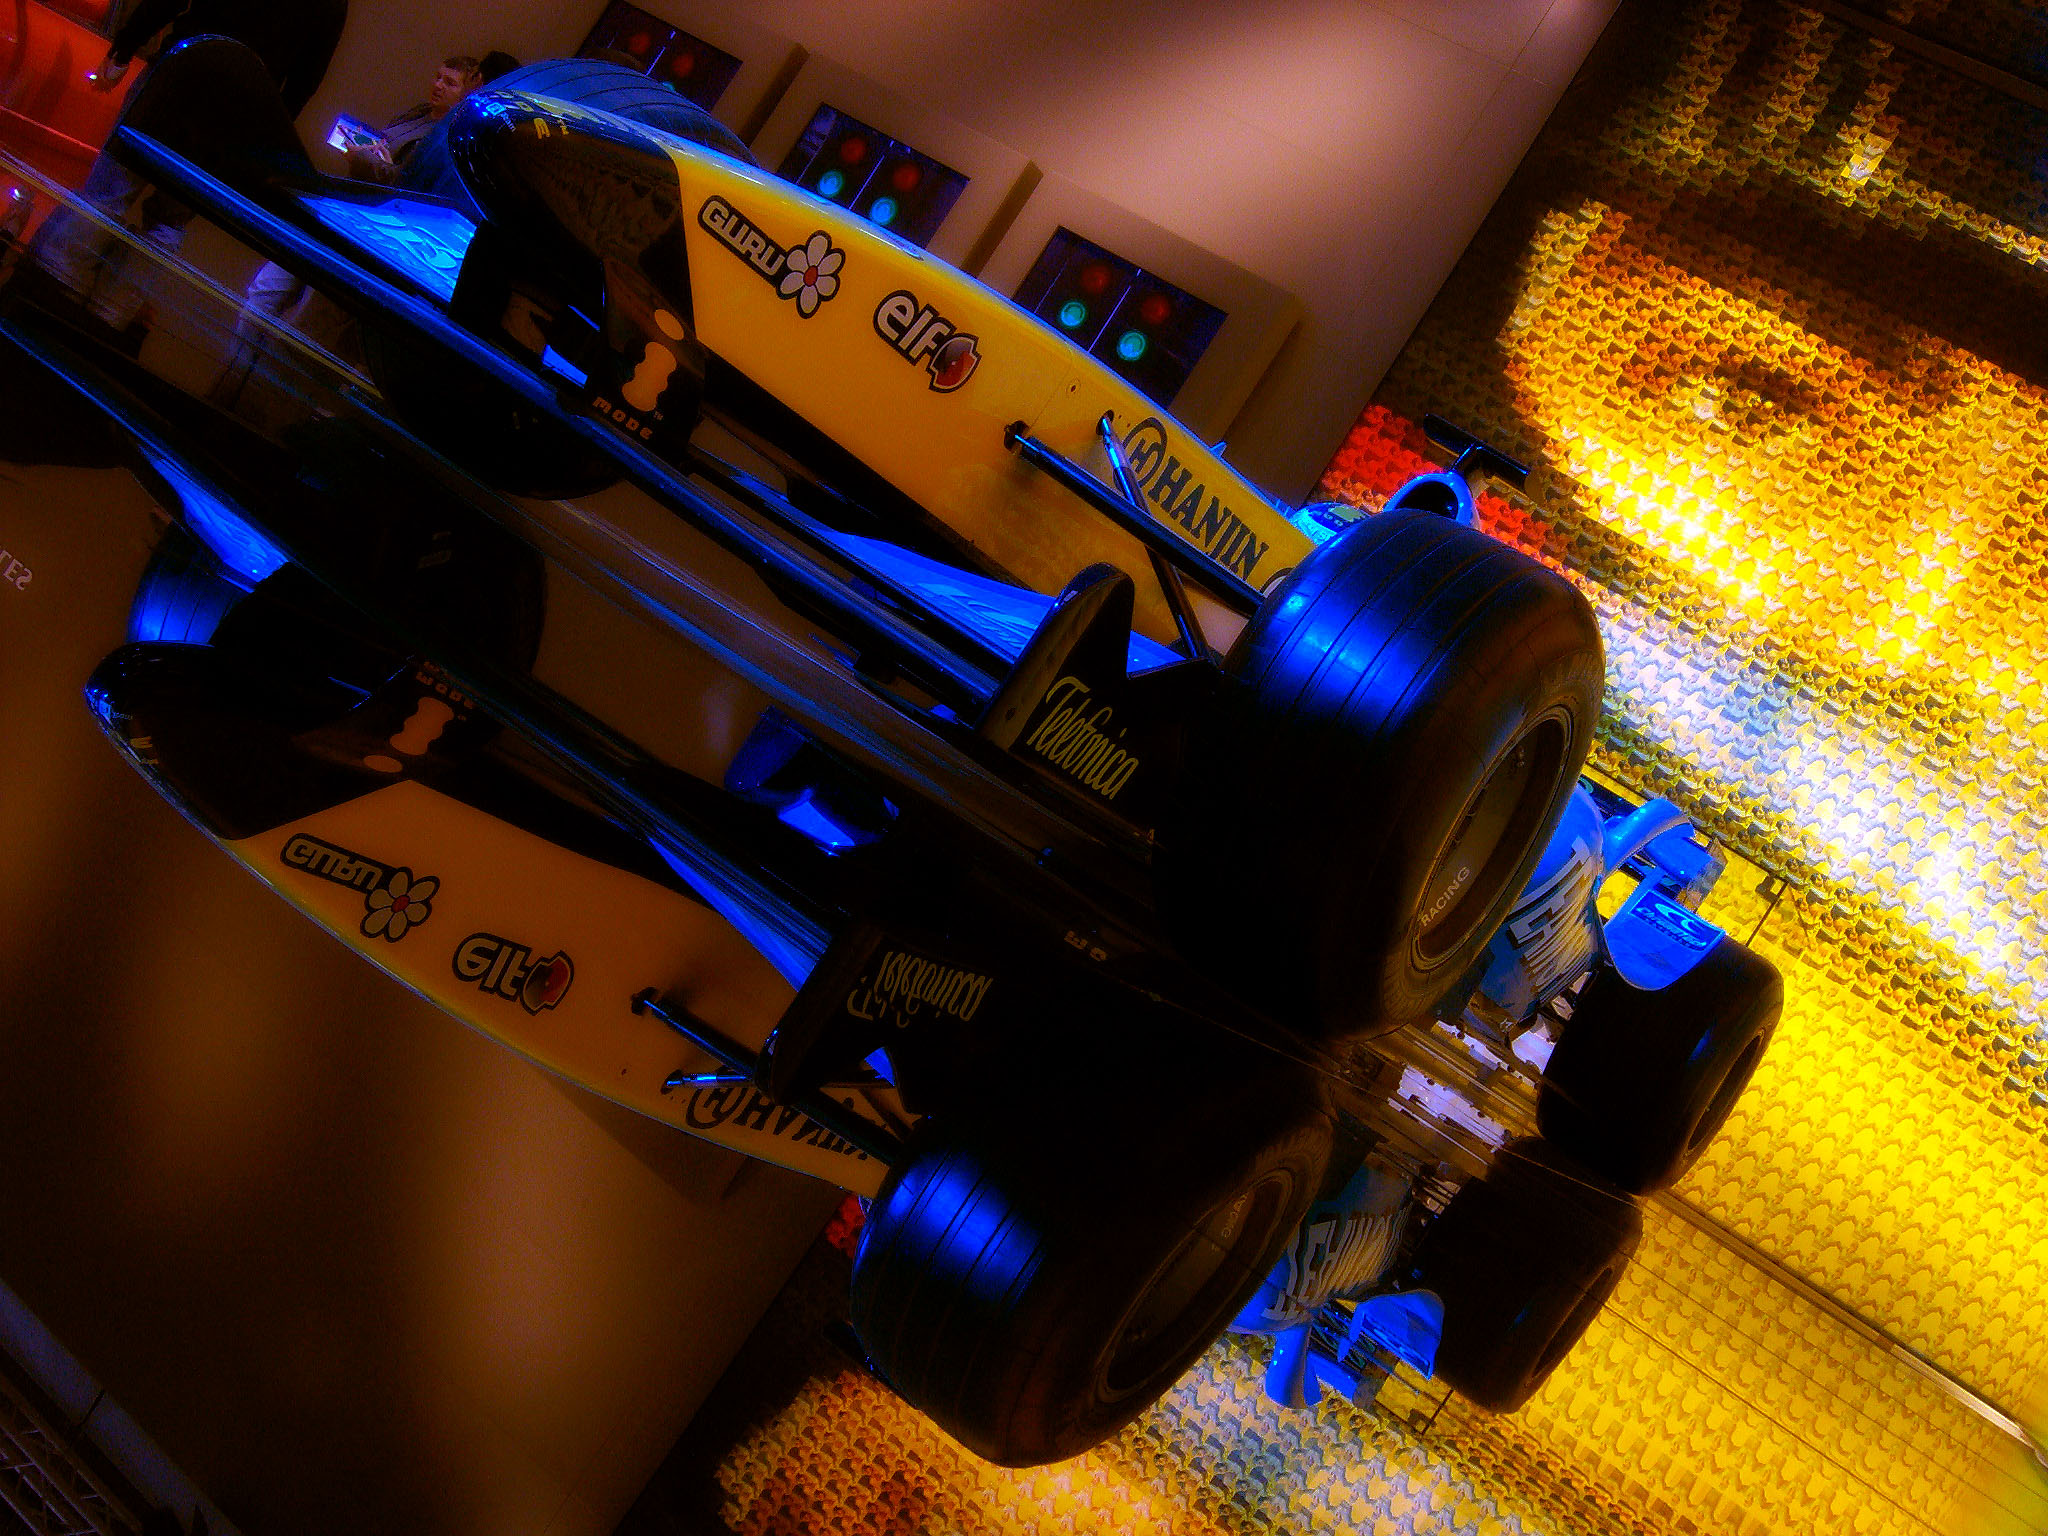 cars, Formula One, vehicles - desktop wallpaper